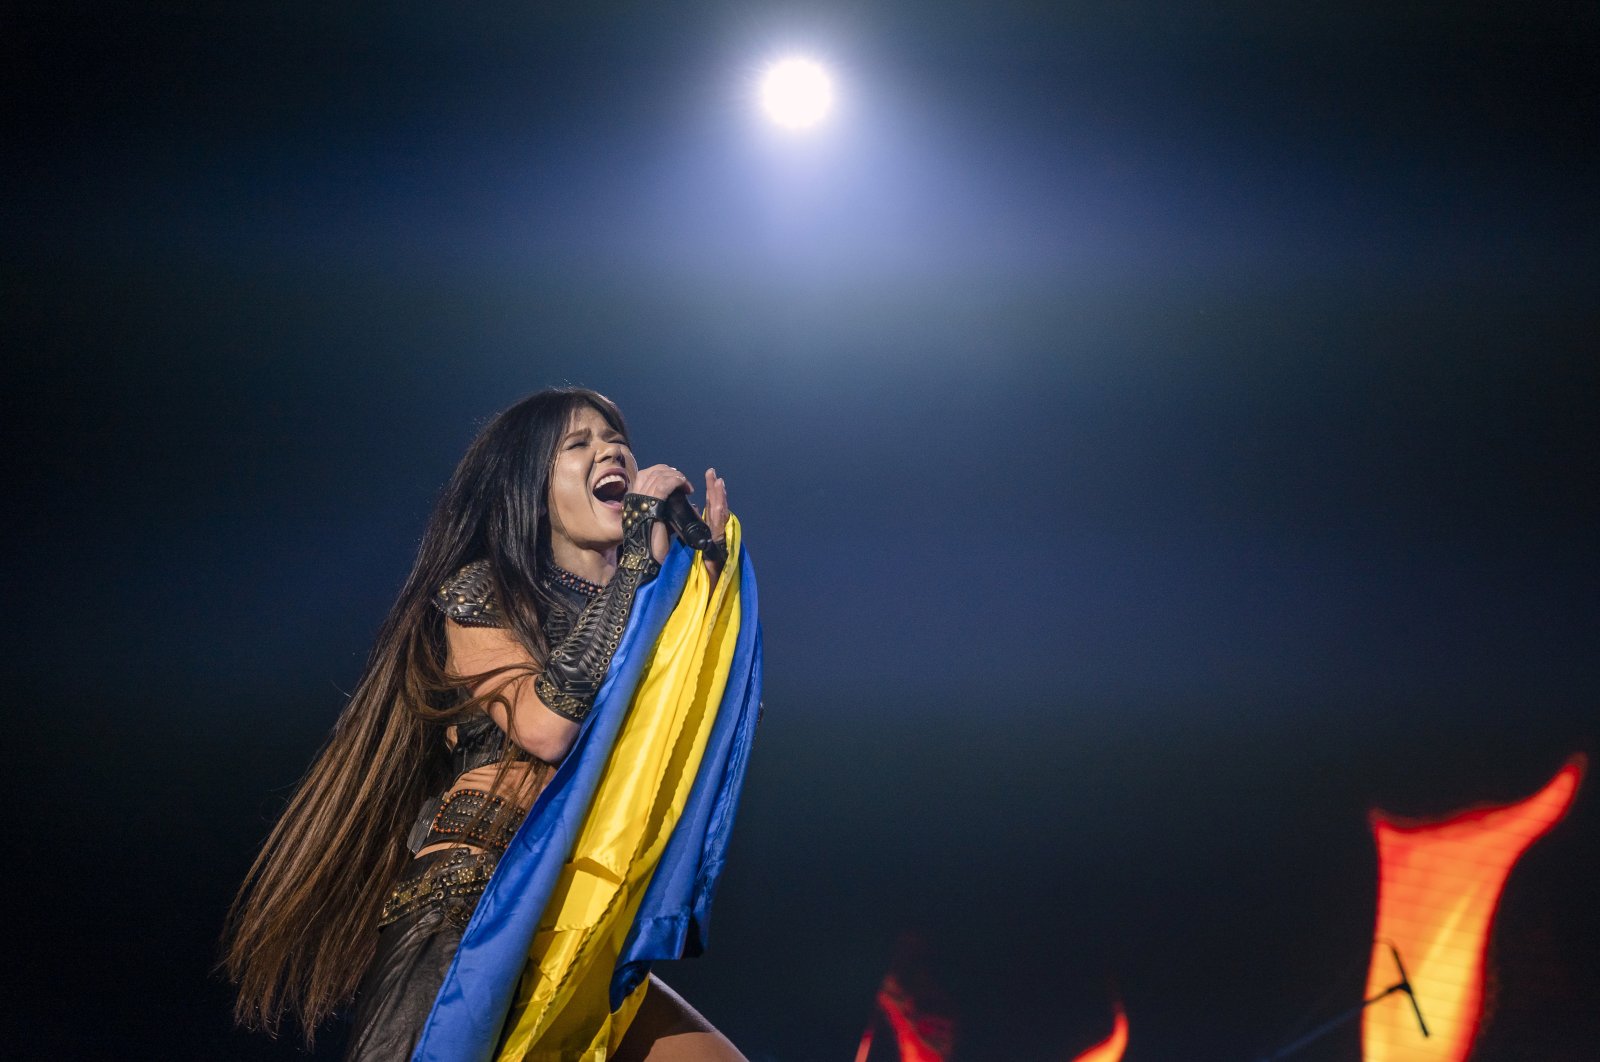 Ukrainian singer Ruslana during a performance. (Photo courtesy of Ruslana)